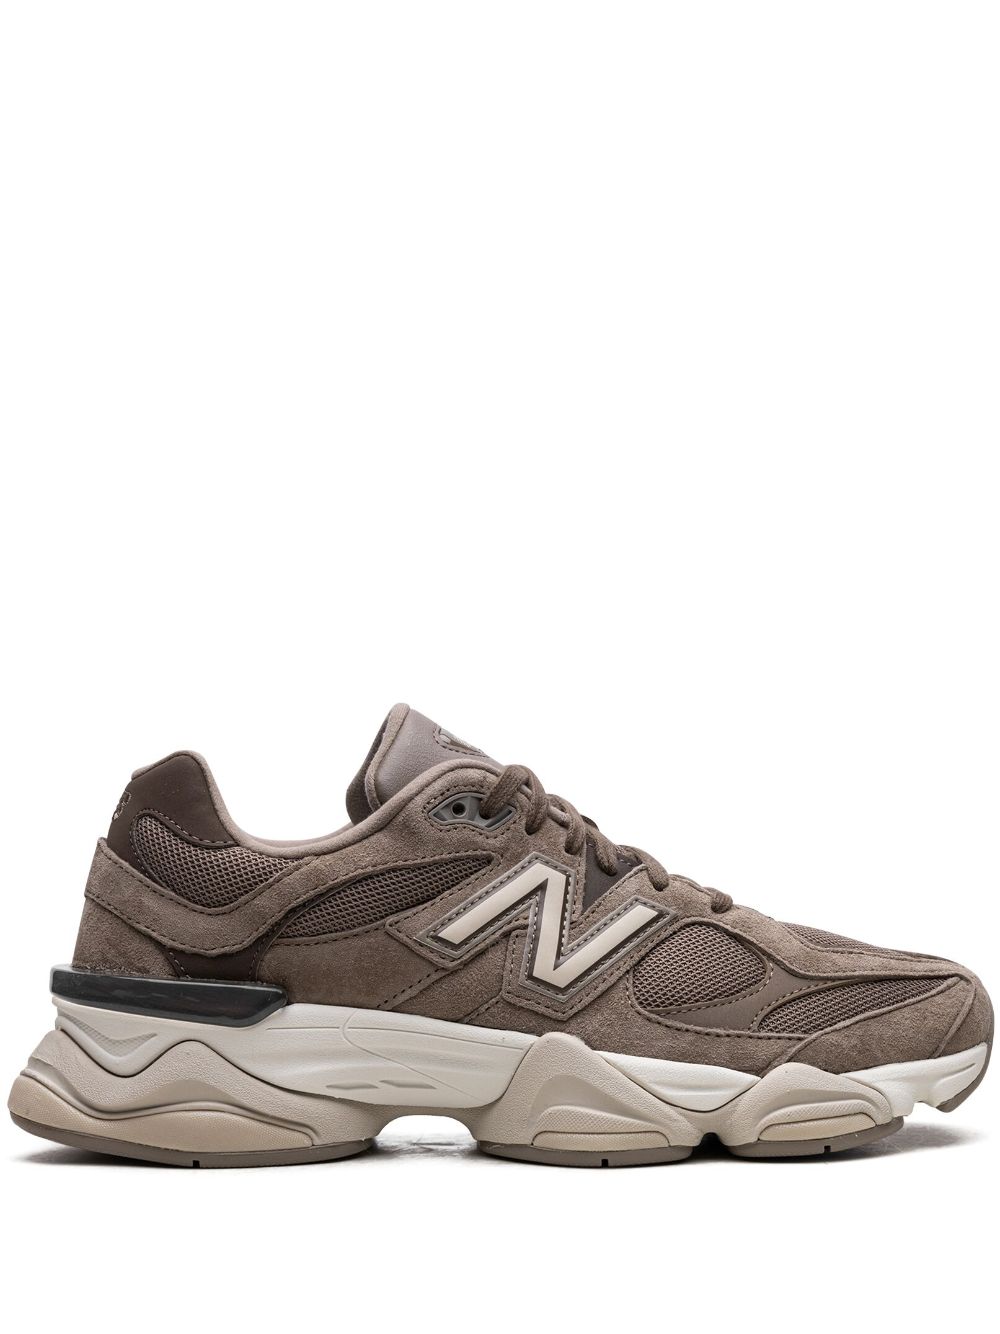 New Balance 9060 "Mushroom/Brown" sneakers